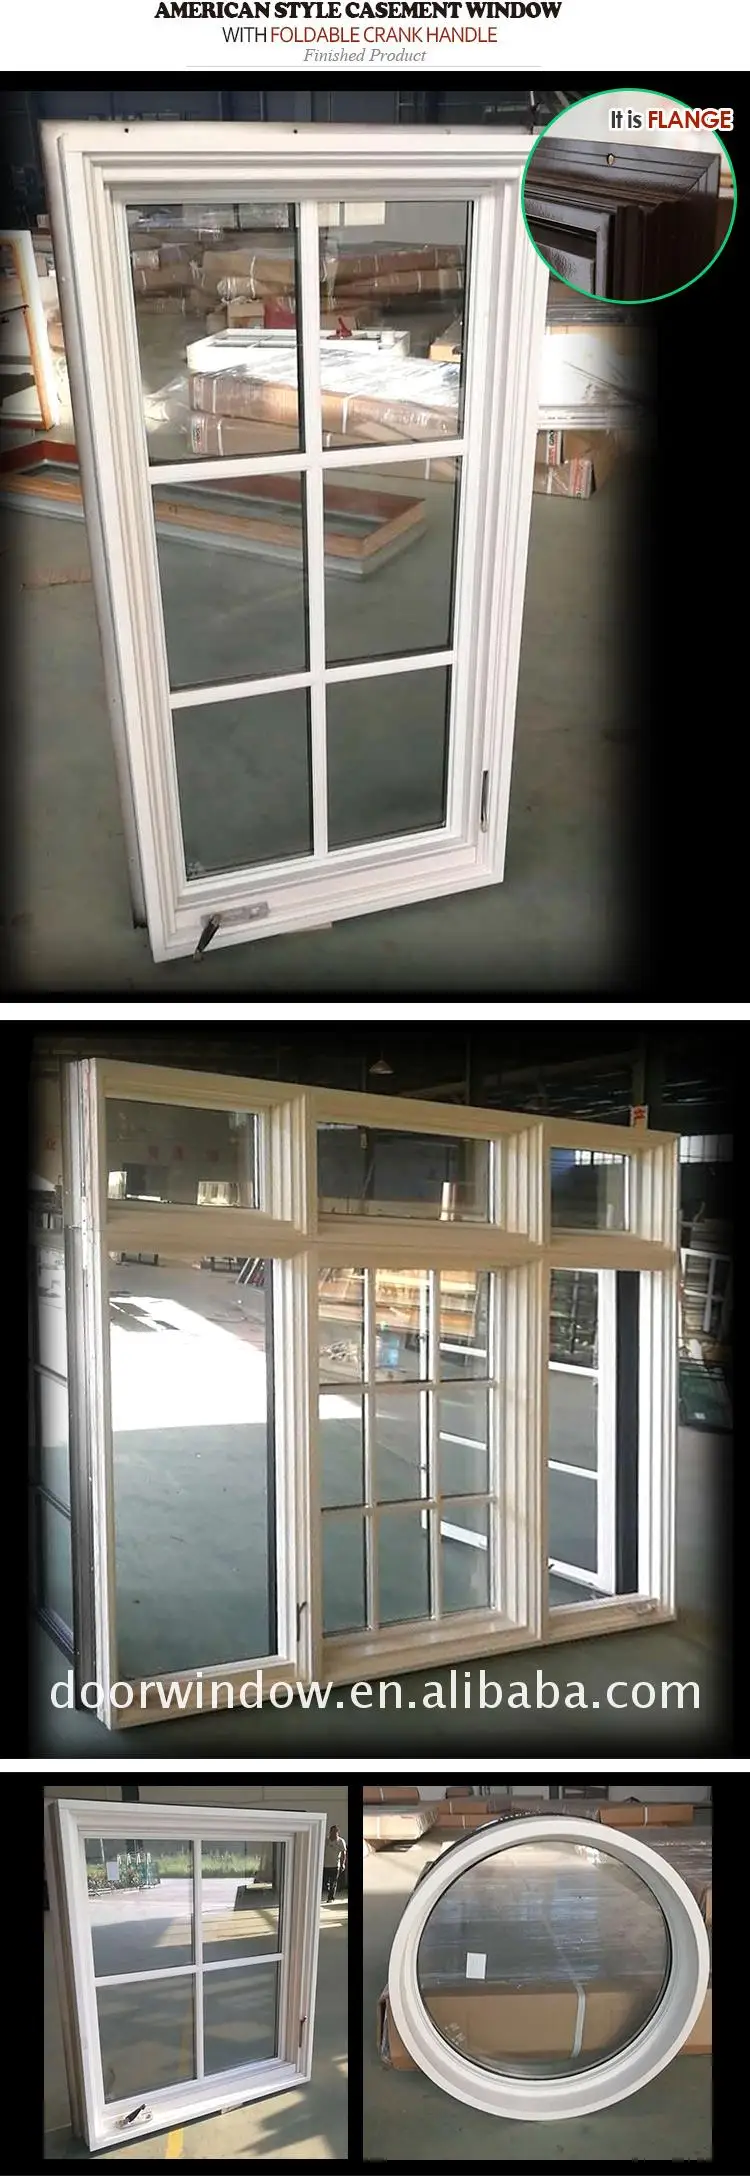 Factory made window treatment ideas for casement windows locks frame white